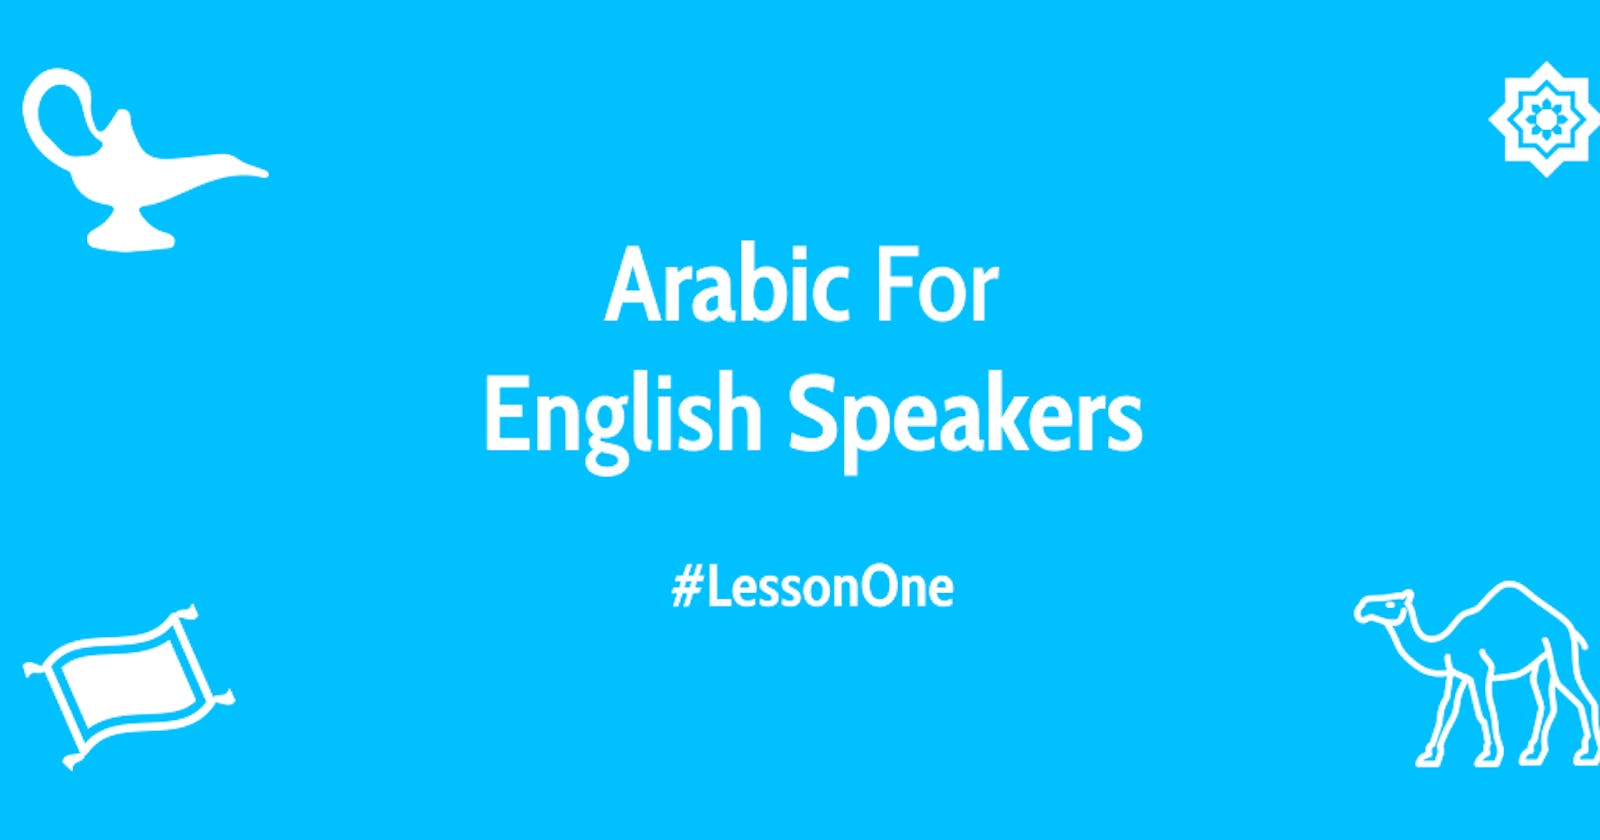 Arabic For English Speakers #LessonOne